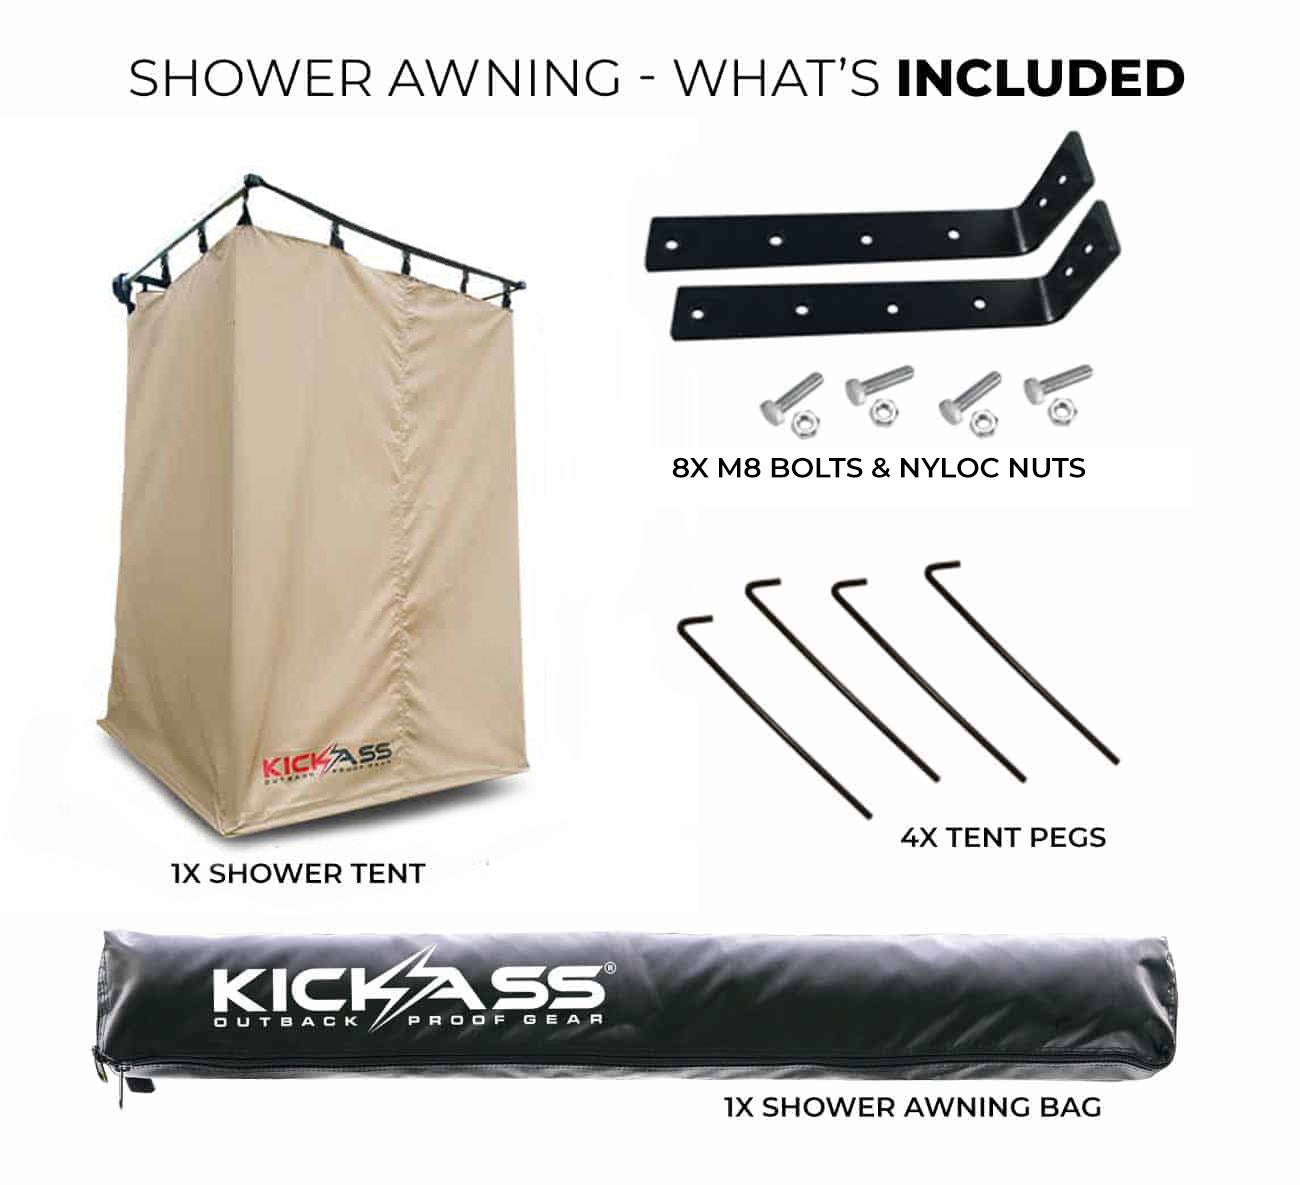 KickAss Instant Ensuite Camping Shower Tent Awning, Shower Base & Portable Lithium Shower Bundle